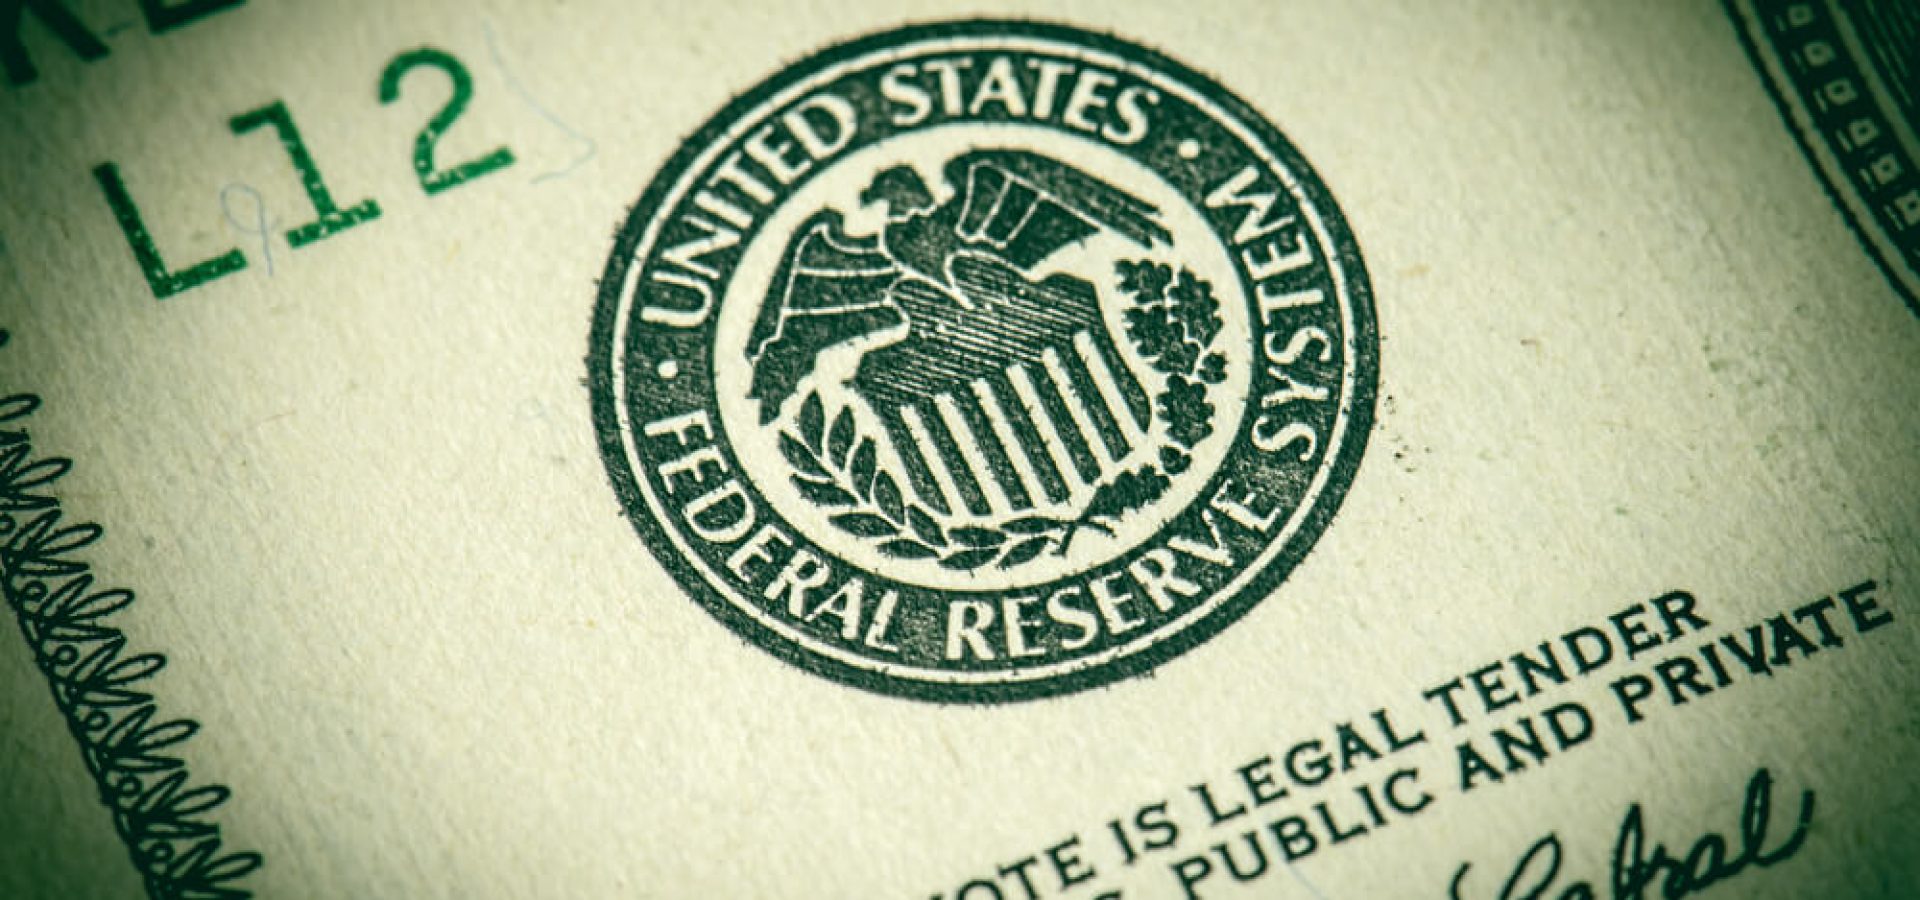 Federal reserve seal on dollar bill